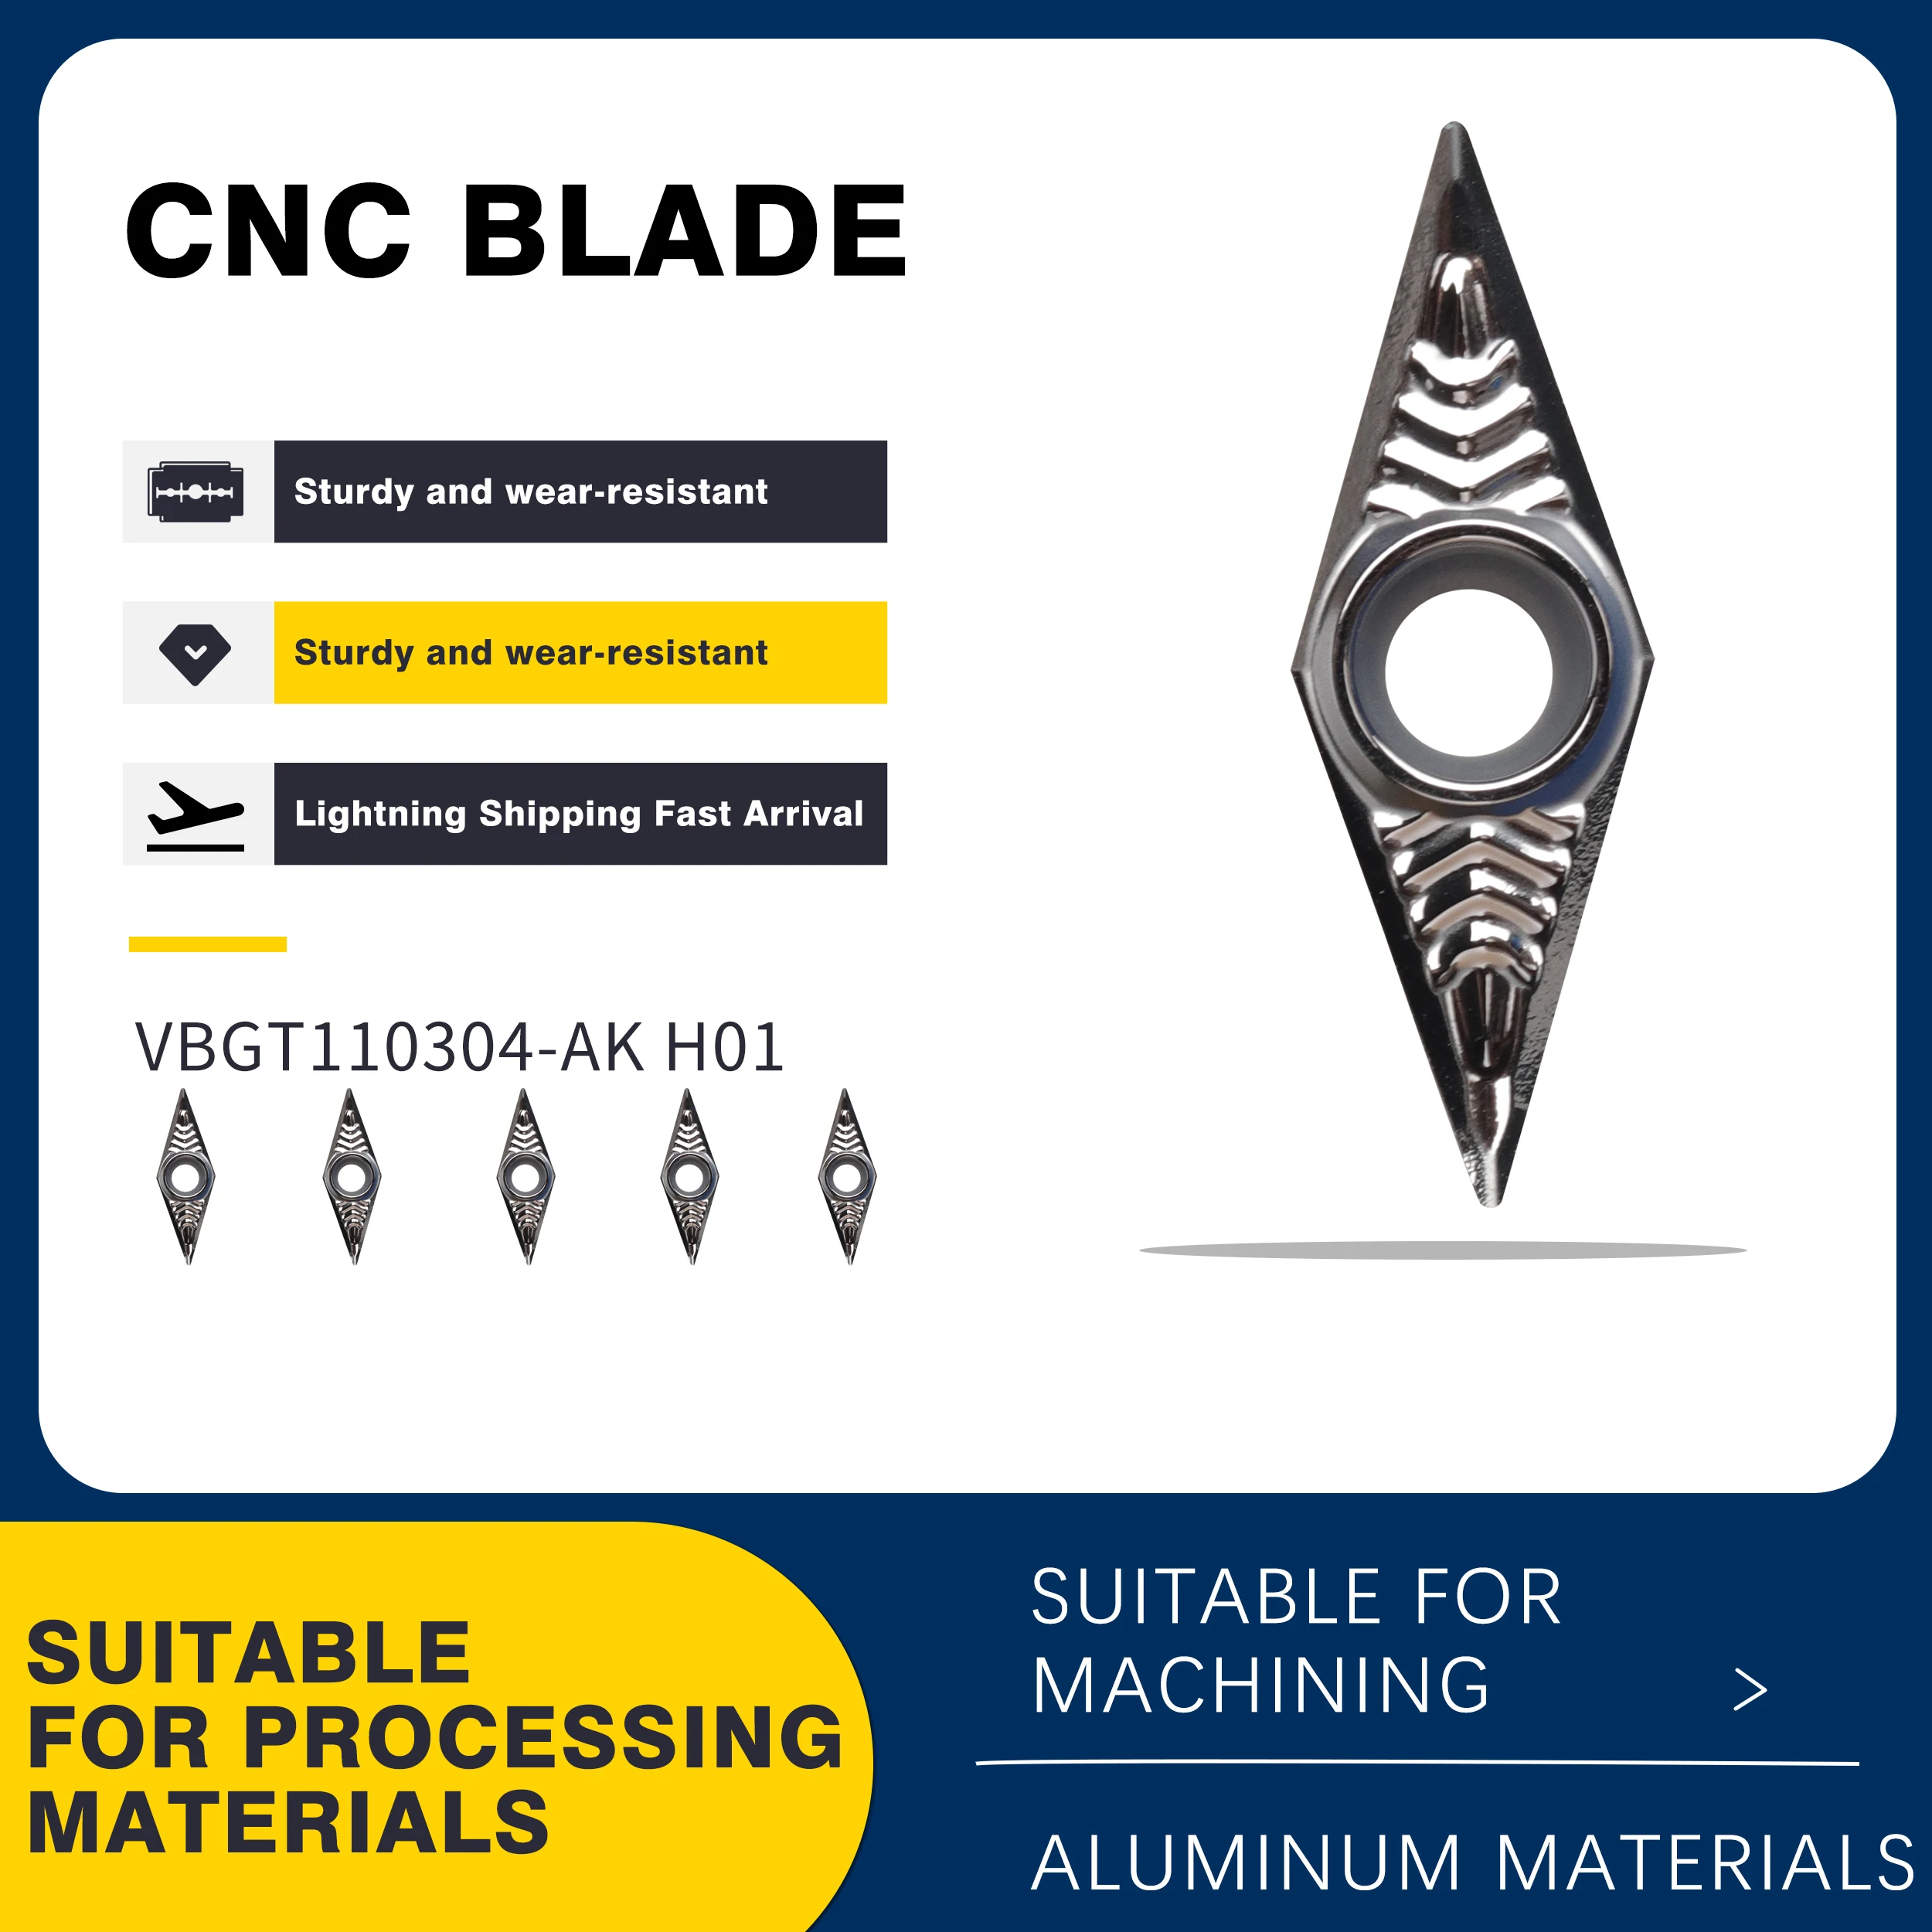 

VBGT110302-AK H01 VBGT110304-AK VBGT110308-AK H01 CNC Lathe Tool Carbide Insert External Turning Tool Cutting Blade For Aluminum